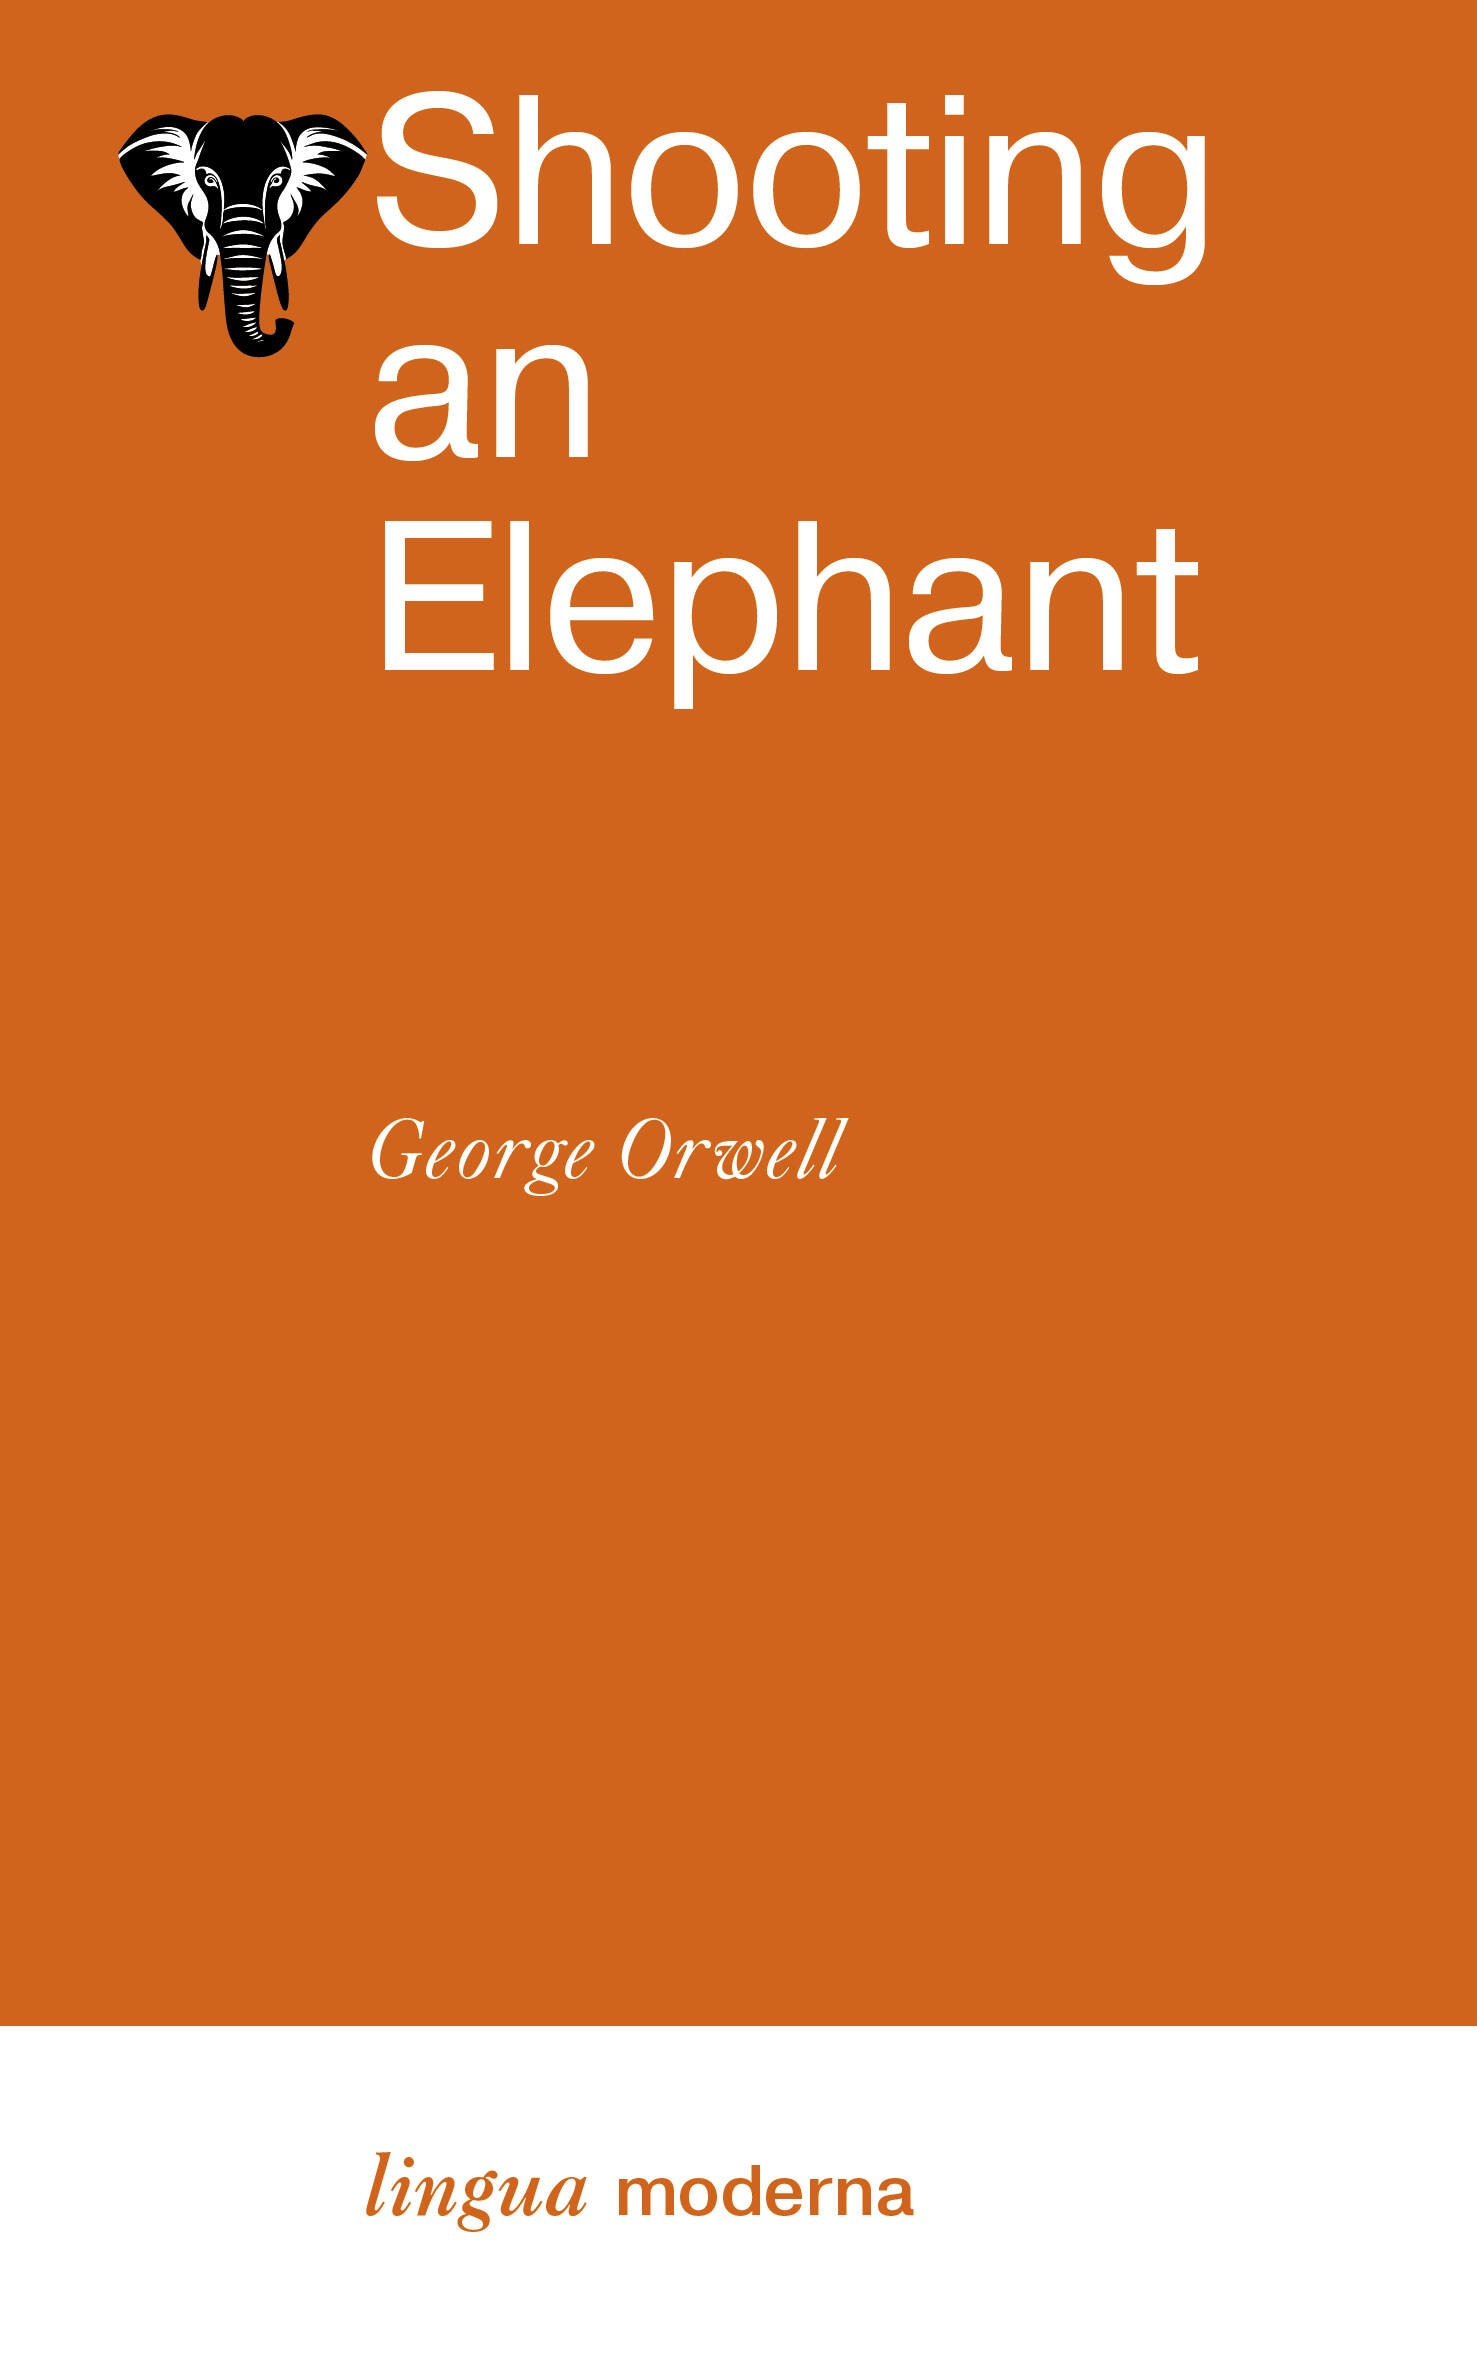 Book “Shooting an Elephant” by Джордж Оруэлл — 2023